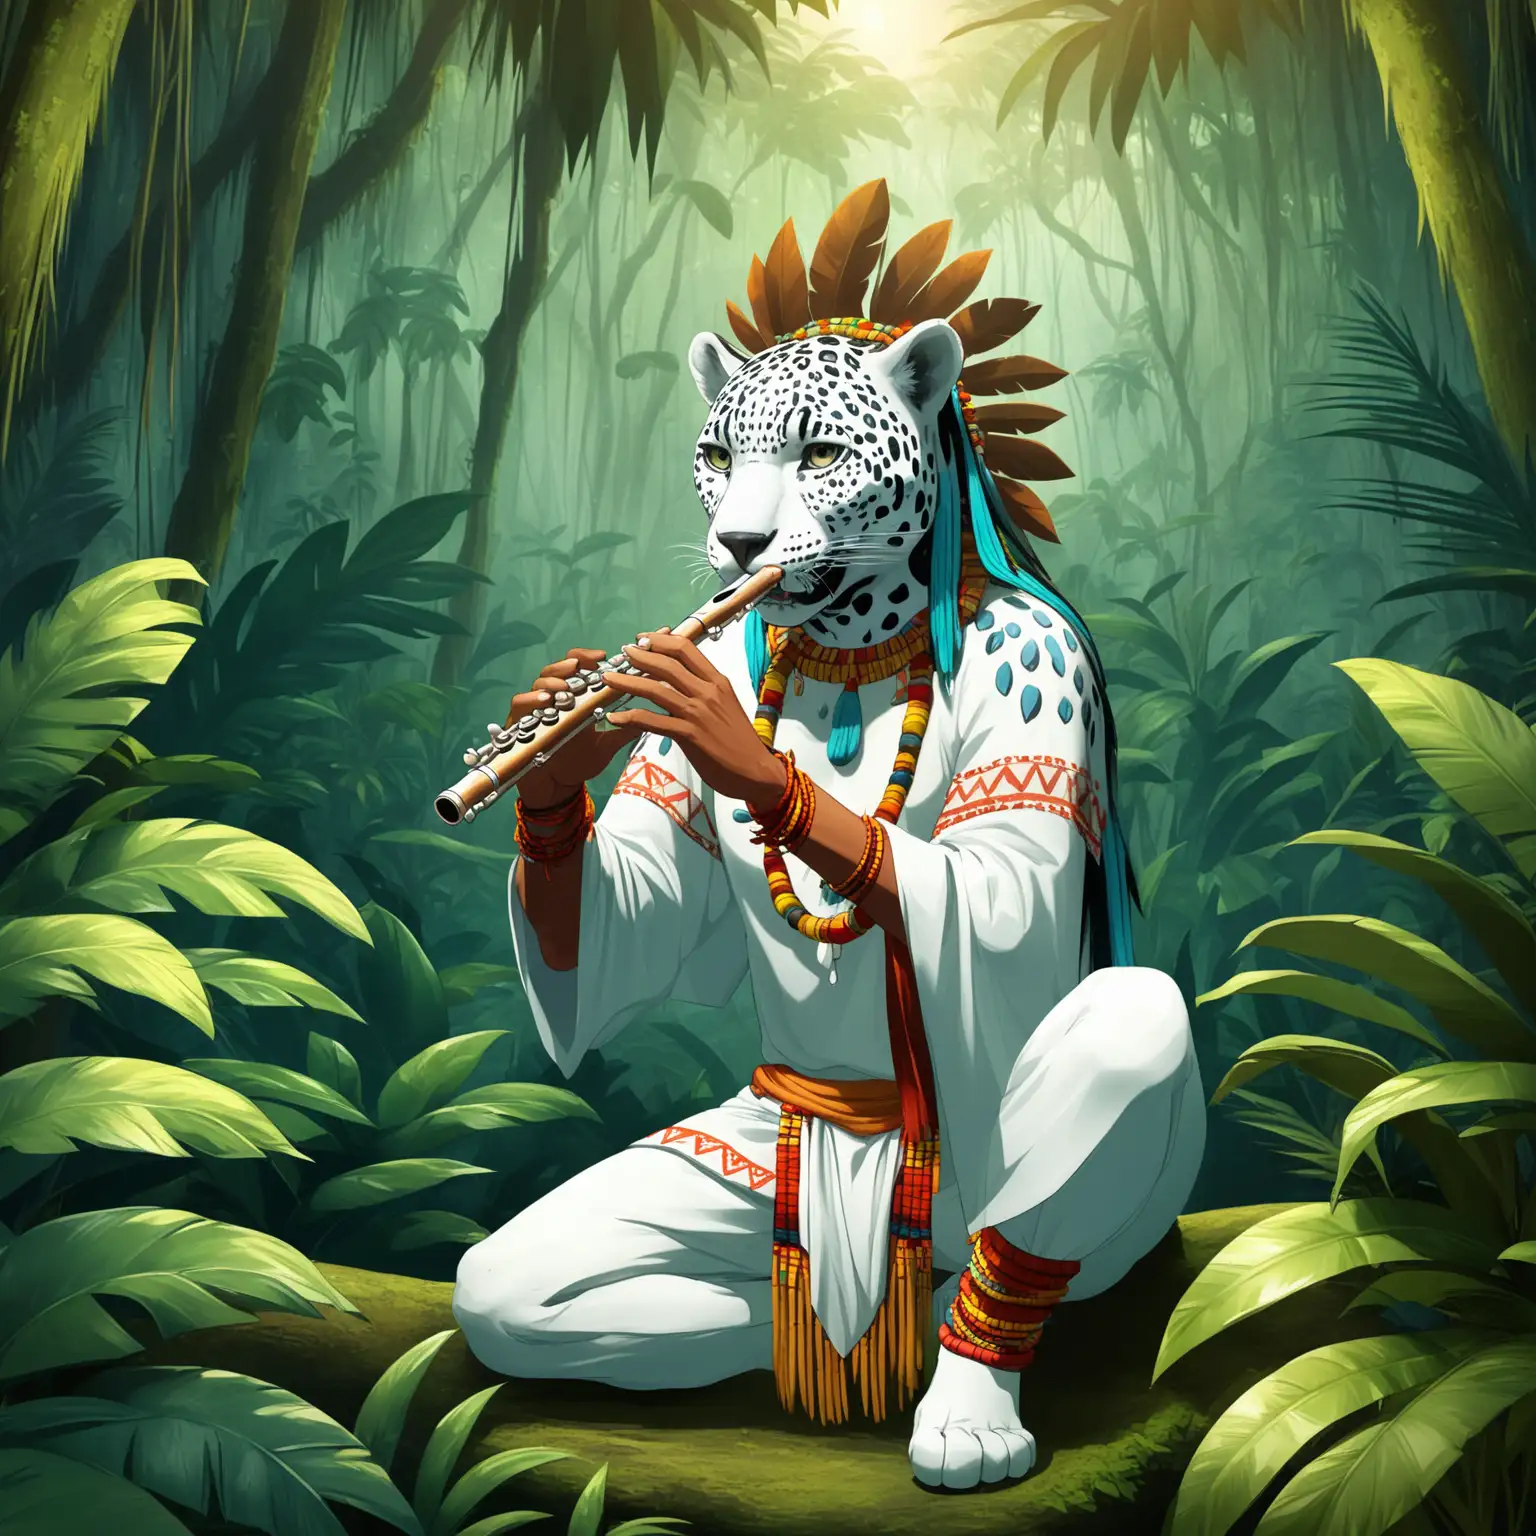 WhiteDressed Jaguar Shaman Playing Flute in Lush Jungle